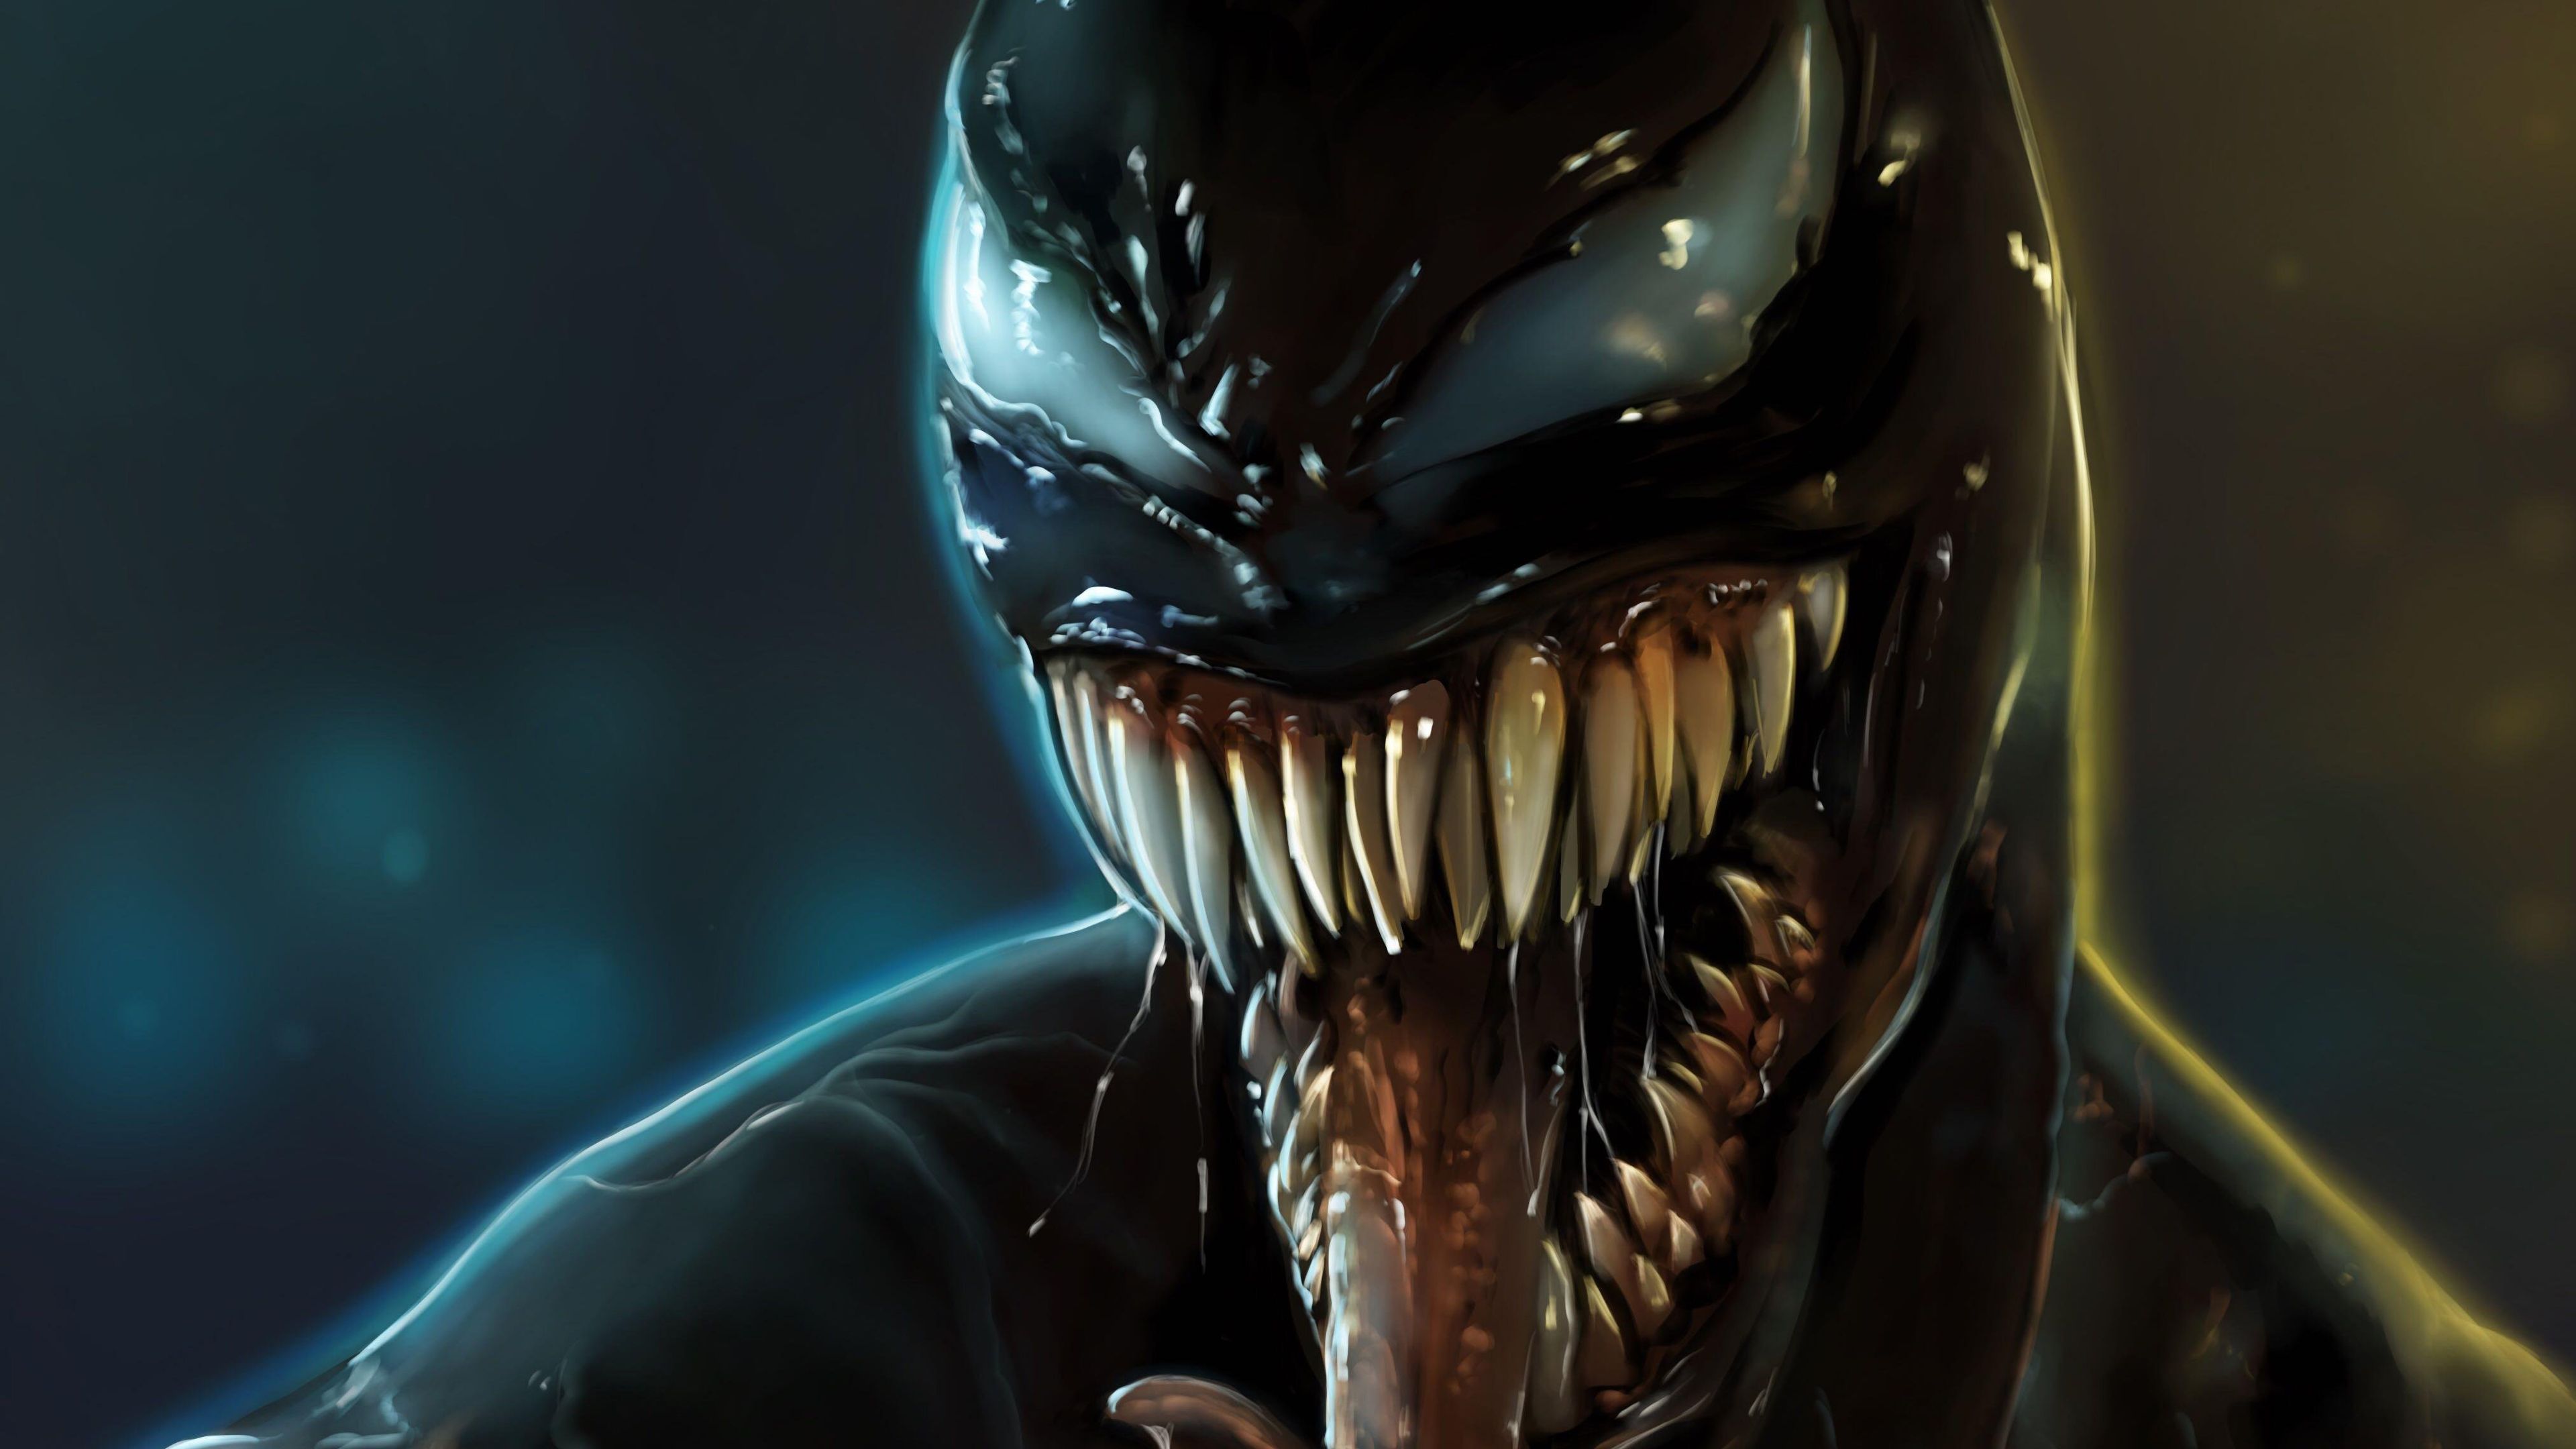 Free download Wallpaper 4k Angry Venom Art 4k wallpaper venom Angry